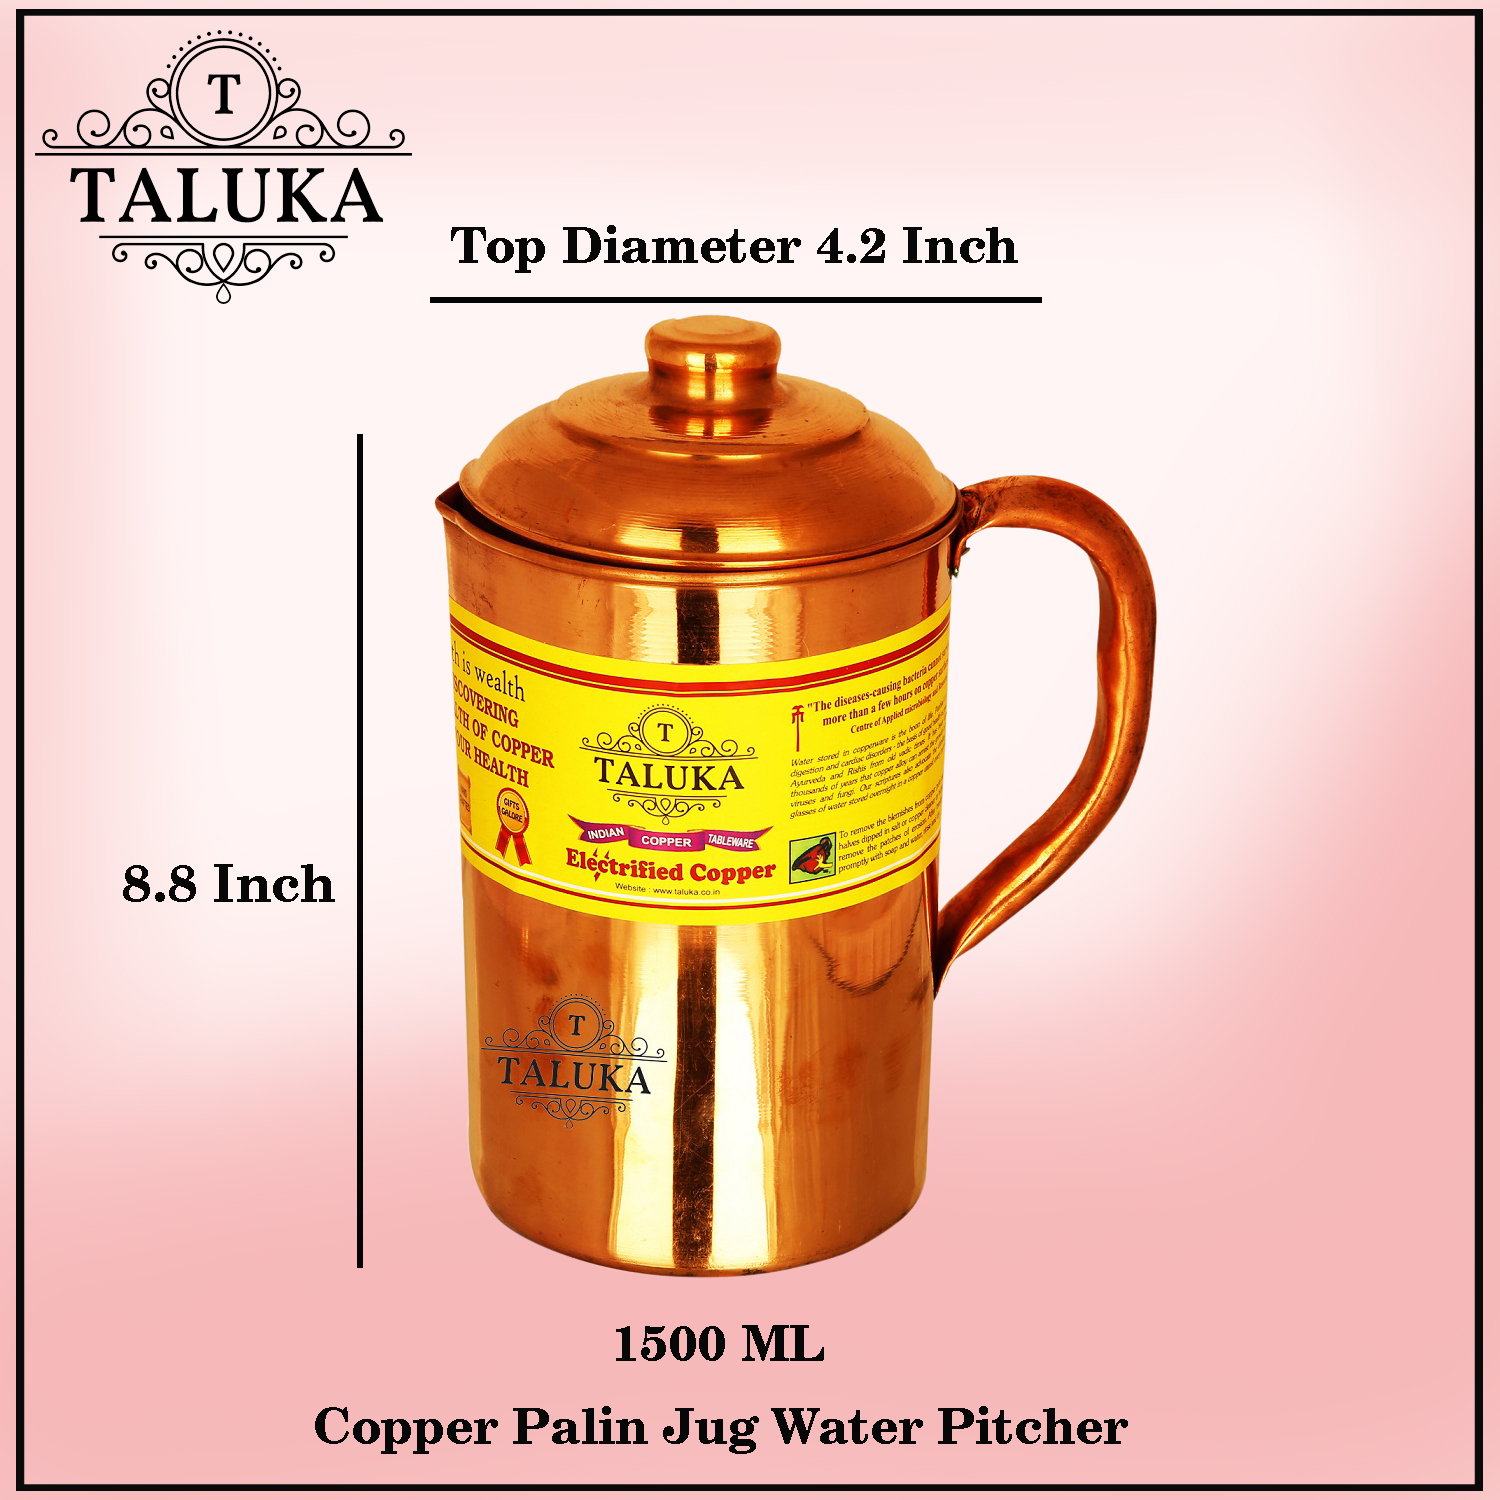 Copper Plain Jug Water Pitcher Drinking Health Benefits Capacity: 1500 ML